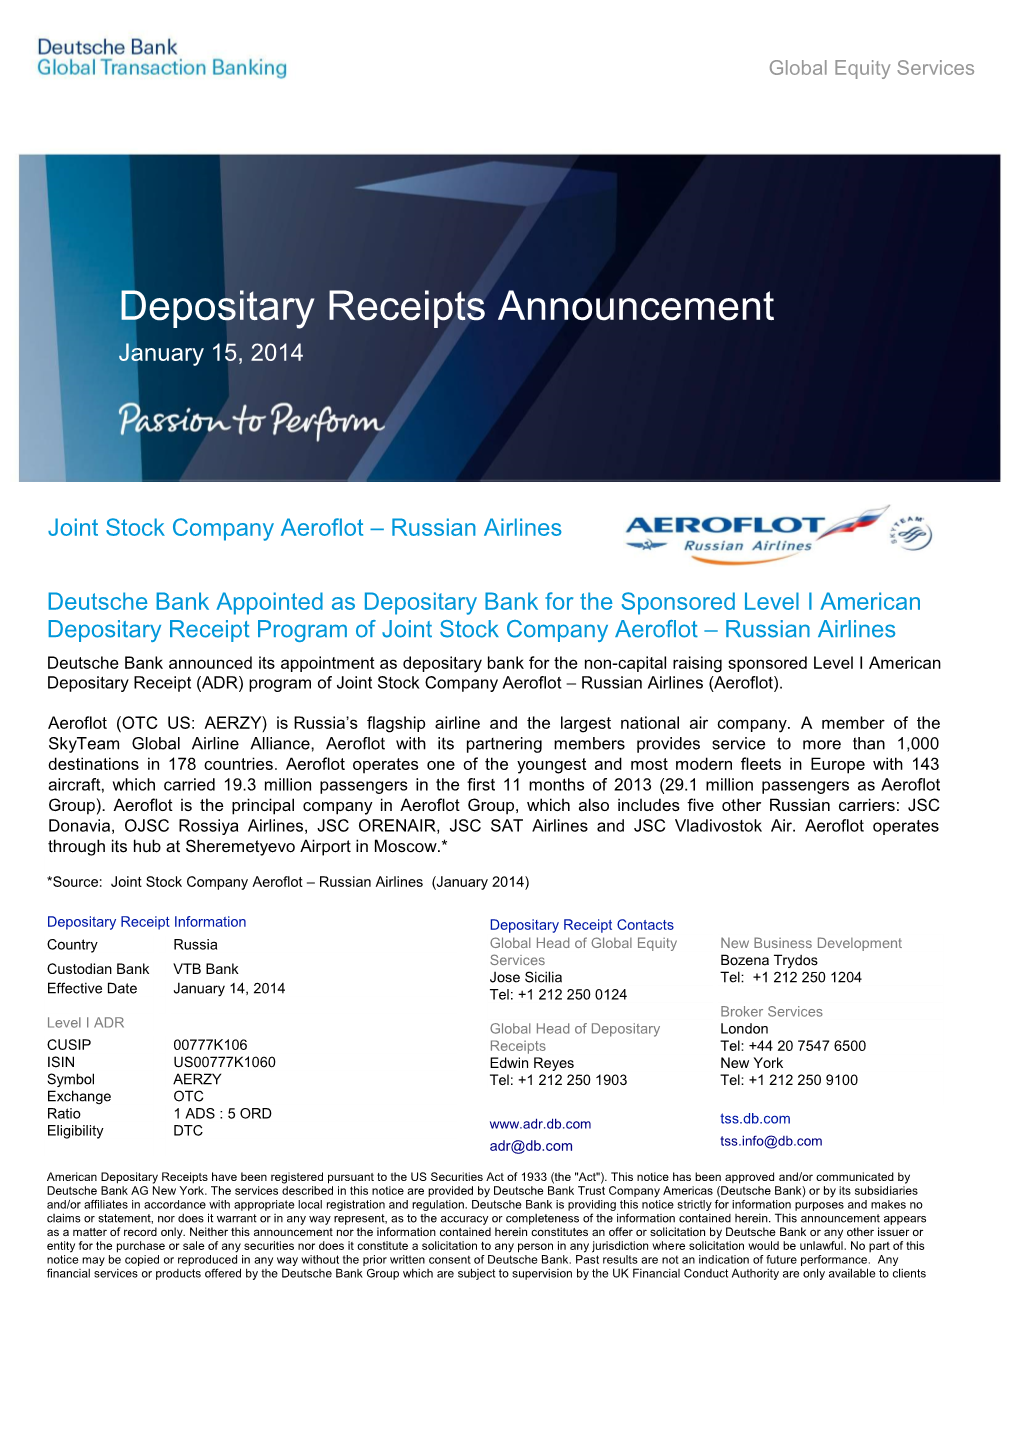 Depositary Receipts Announcement January 15, 2014